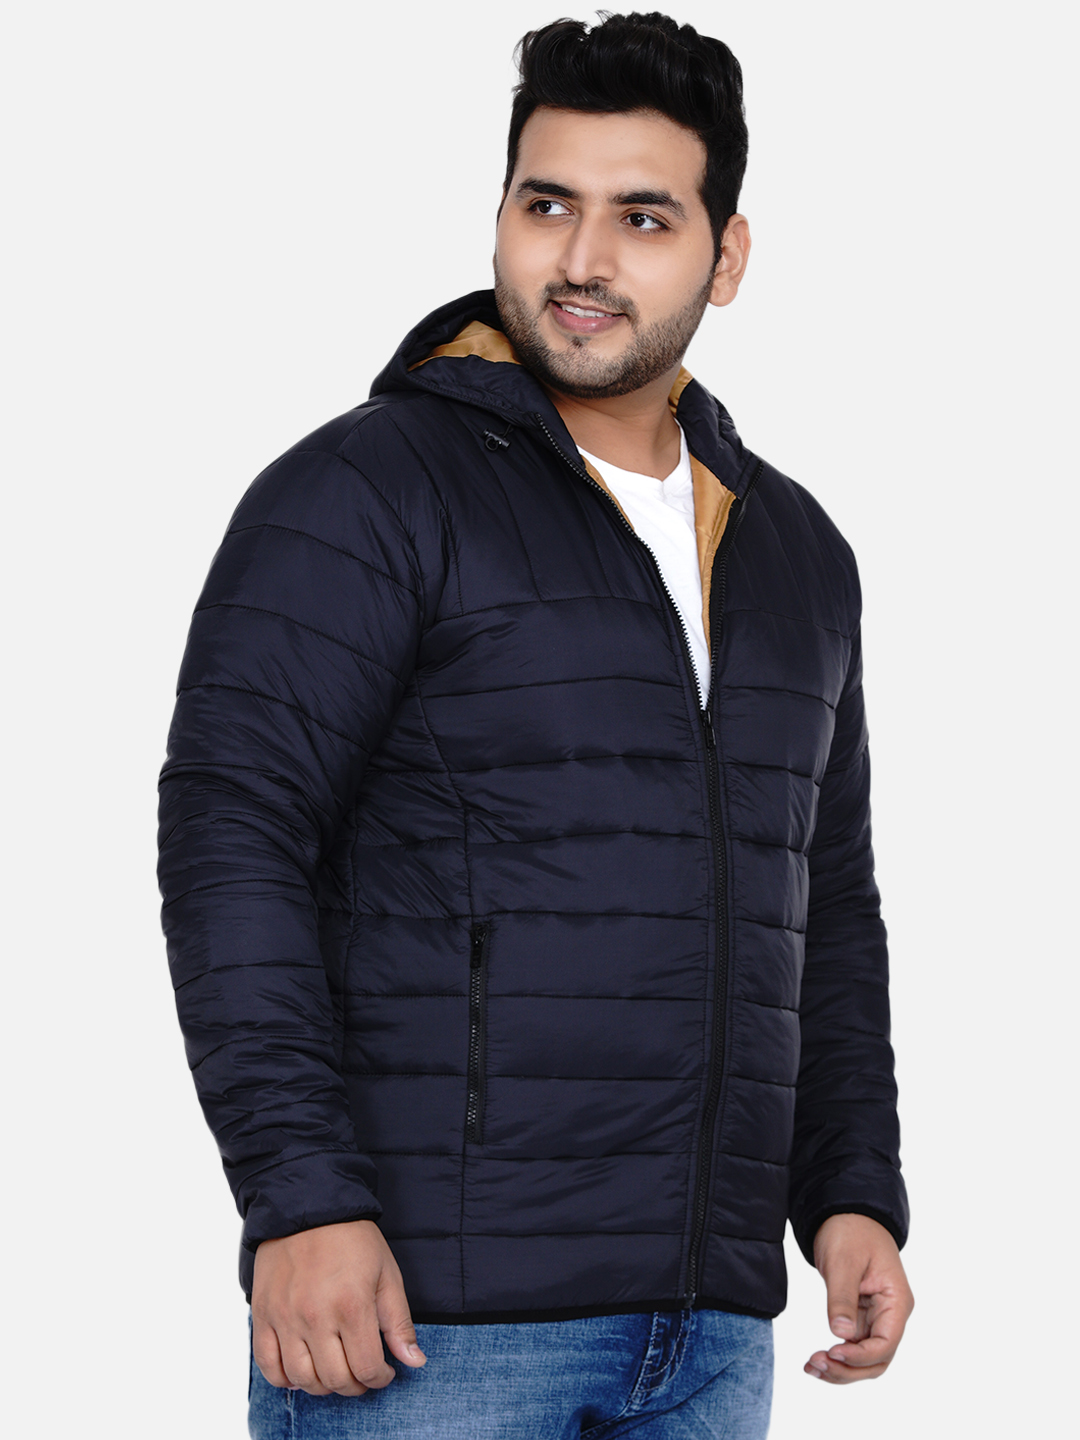 winterwear/jackets/JPJKT73003/jpjkt73003-4.jpg